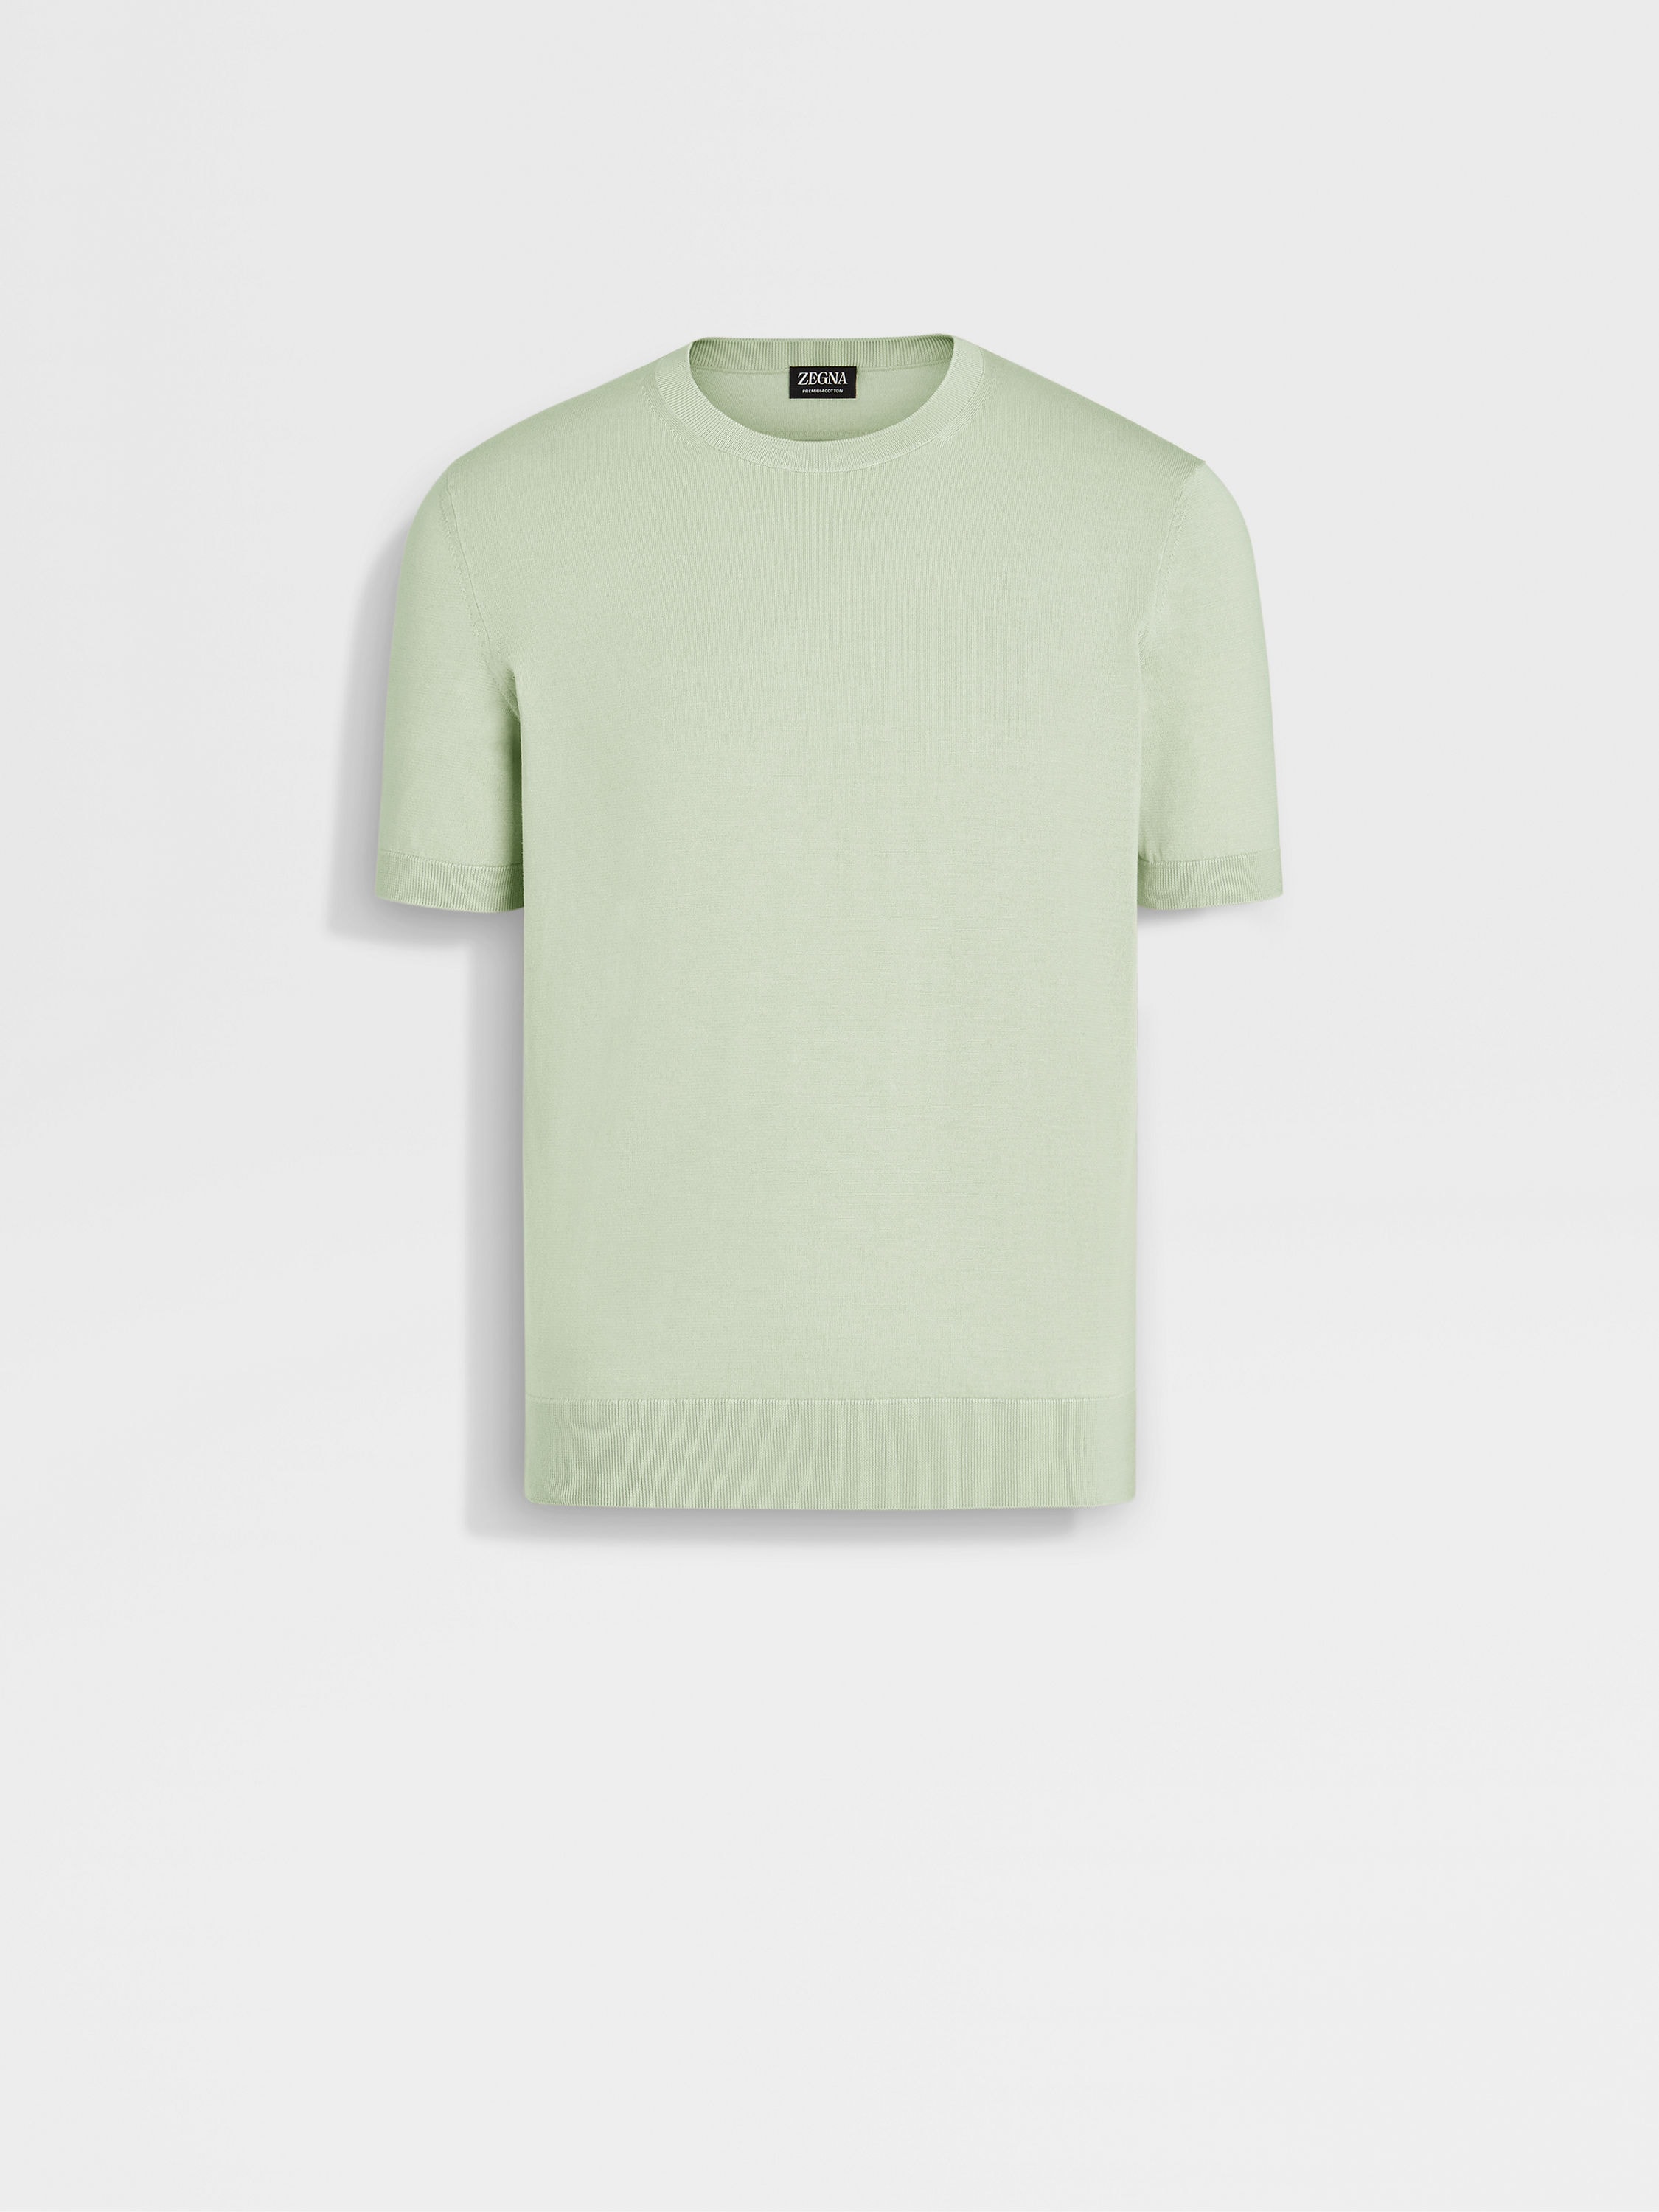 Light Aqua Green Premium Cotton T-shirt